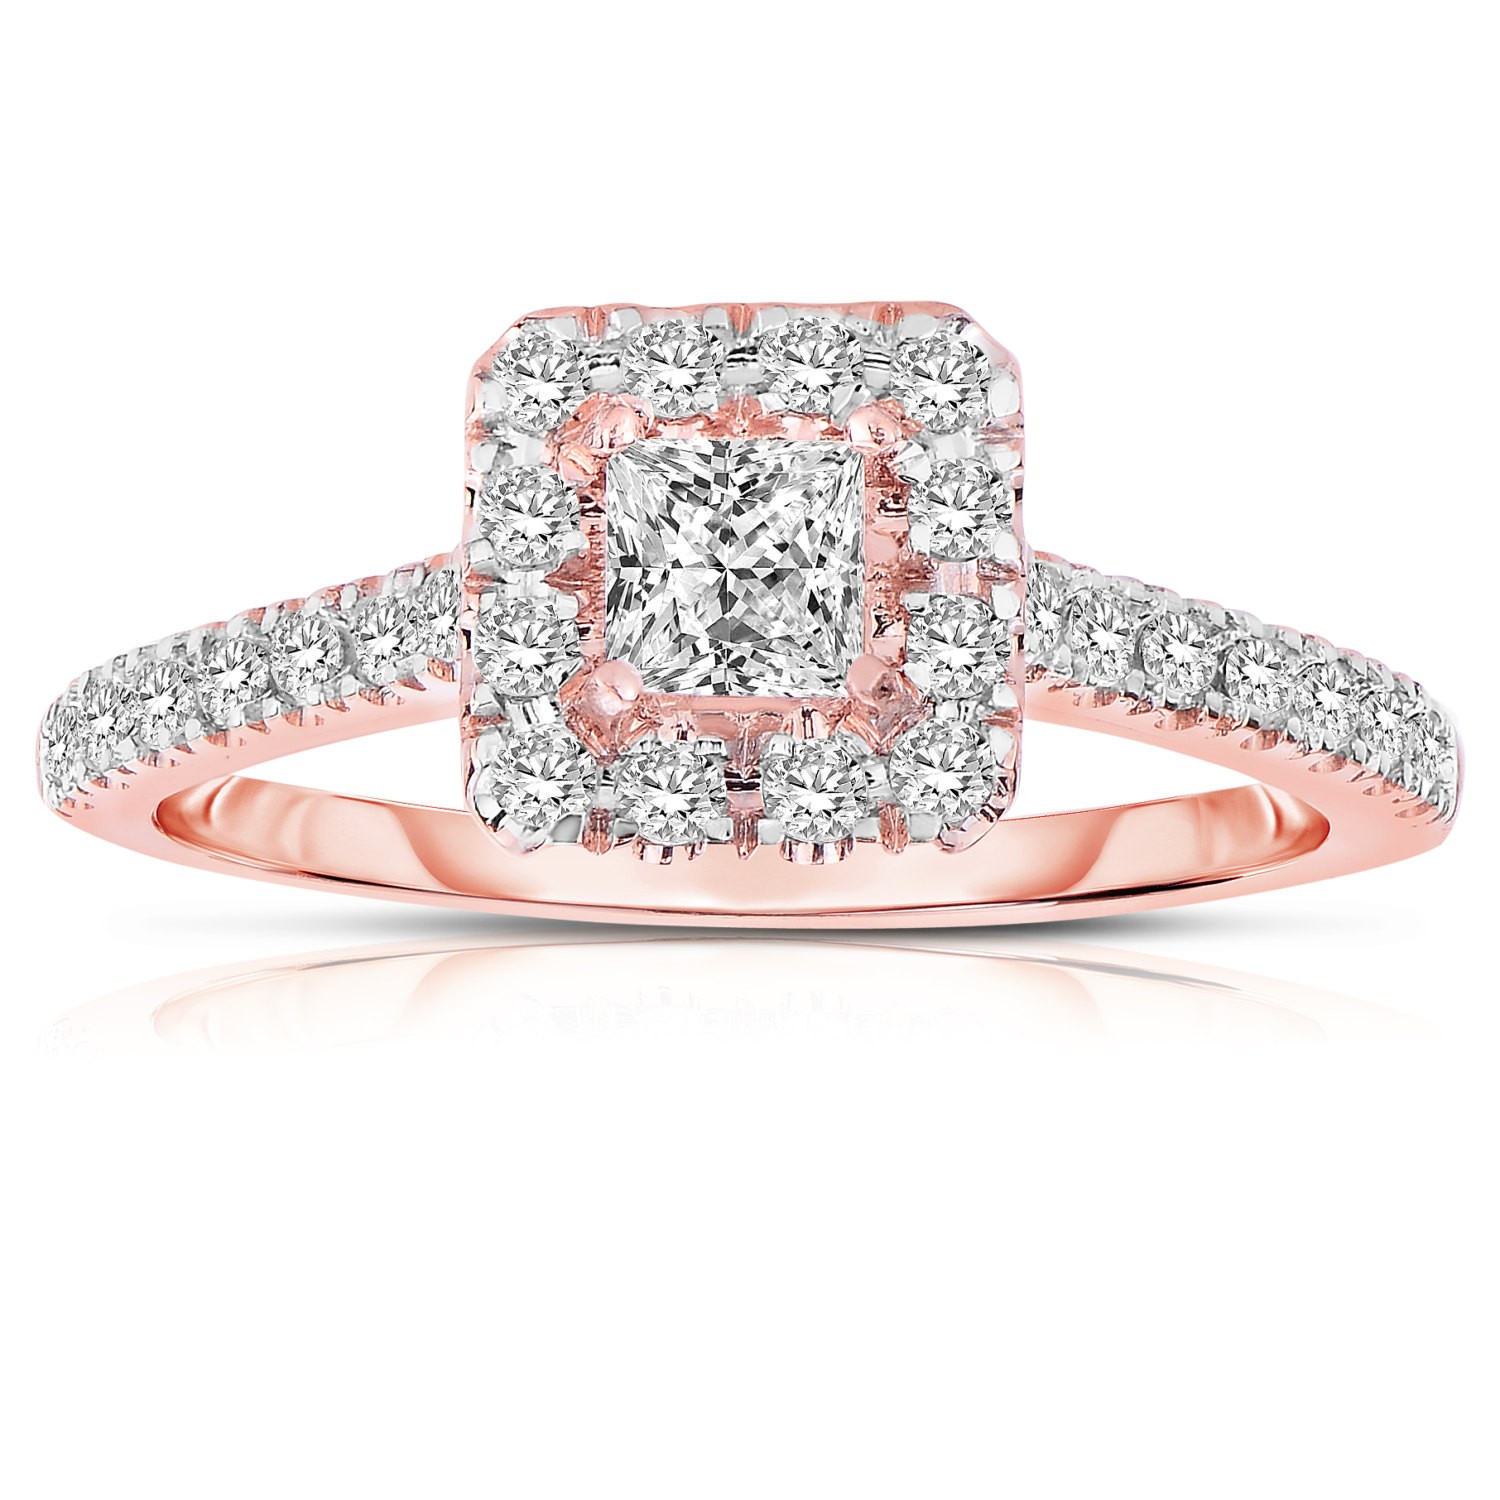  Princess cut Halo Diamond Engagement Ring in Rose Gold  JeenJewels